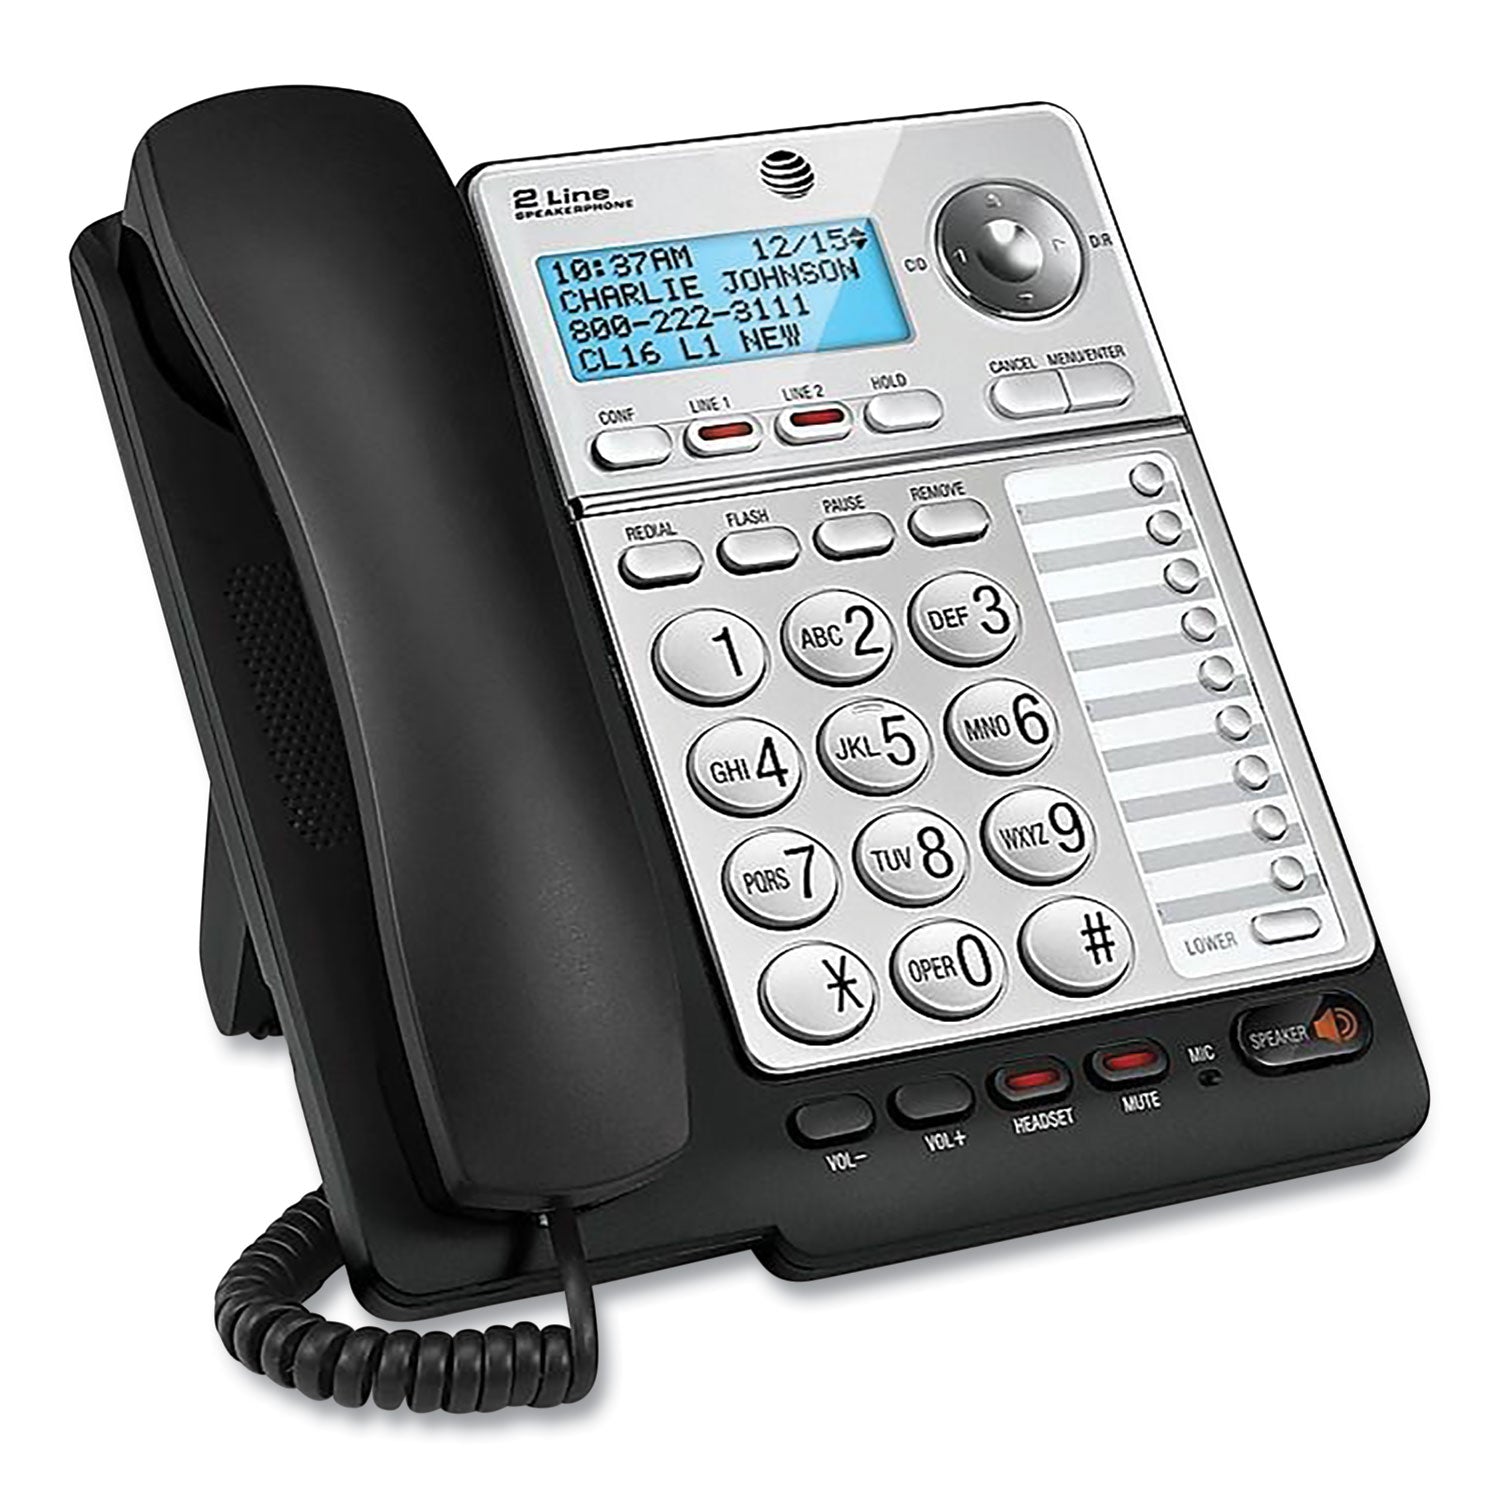 ml17928-two-line-corded-speakerphone-black-silver_attml17928 - 3